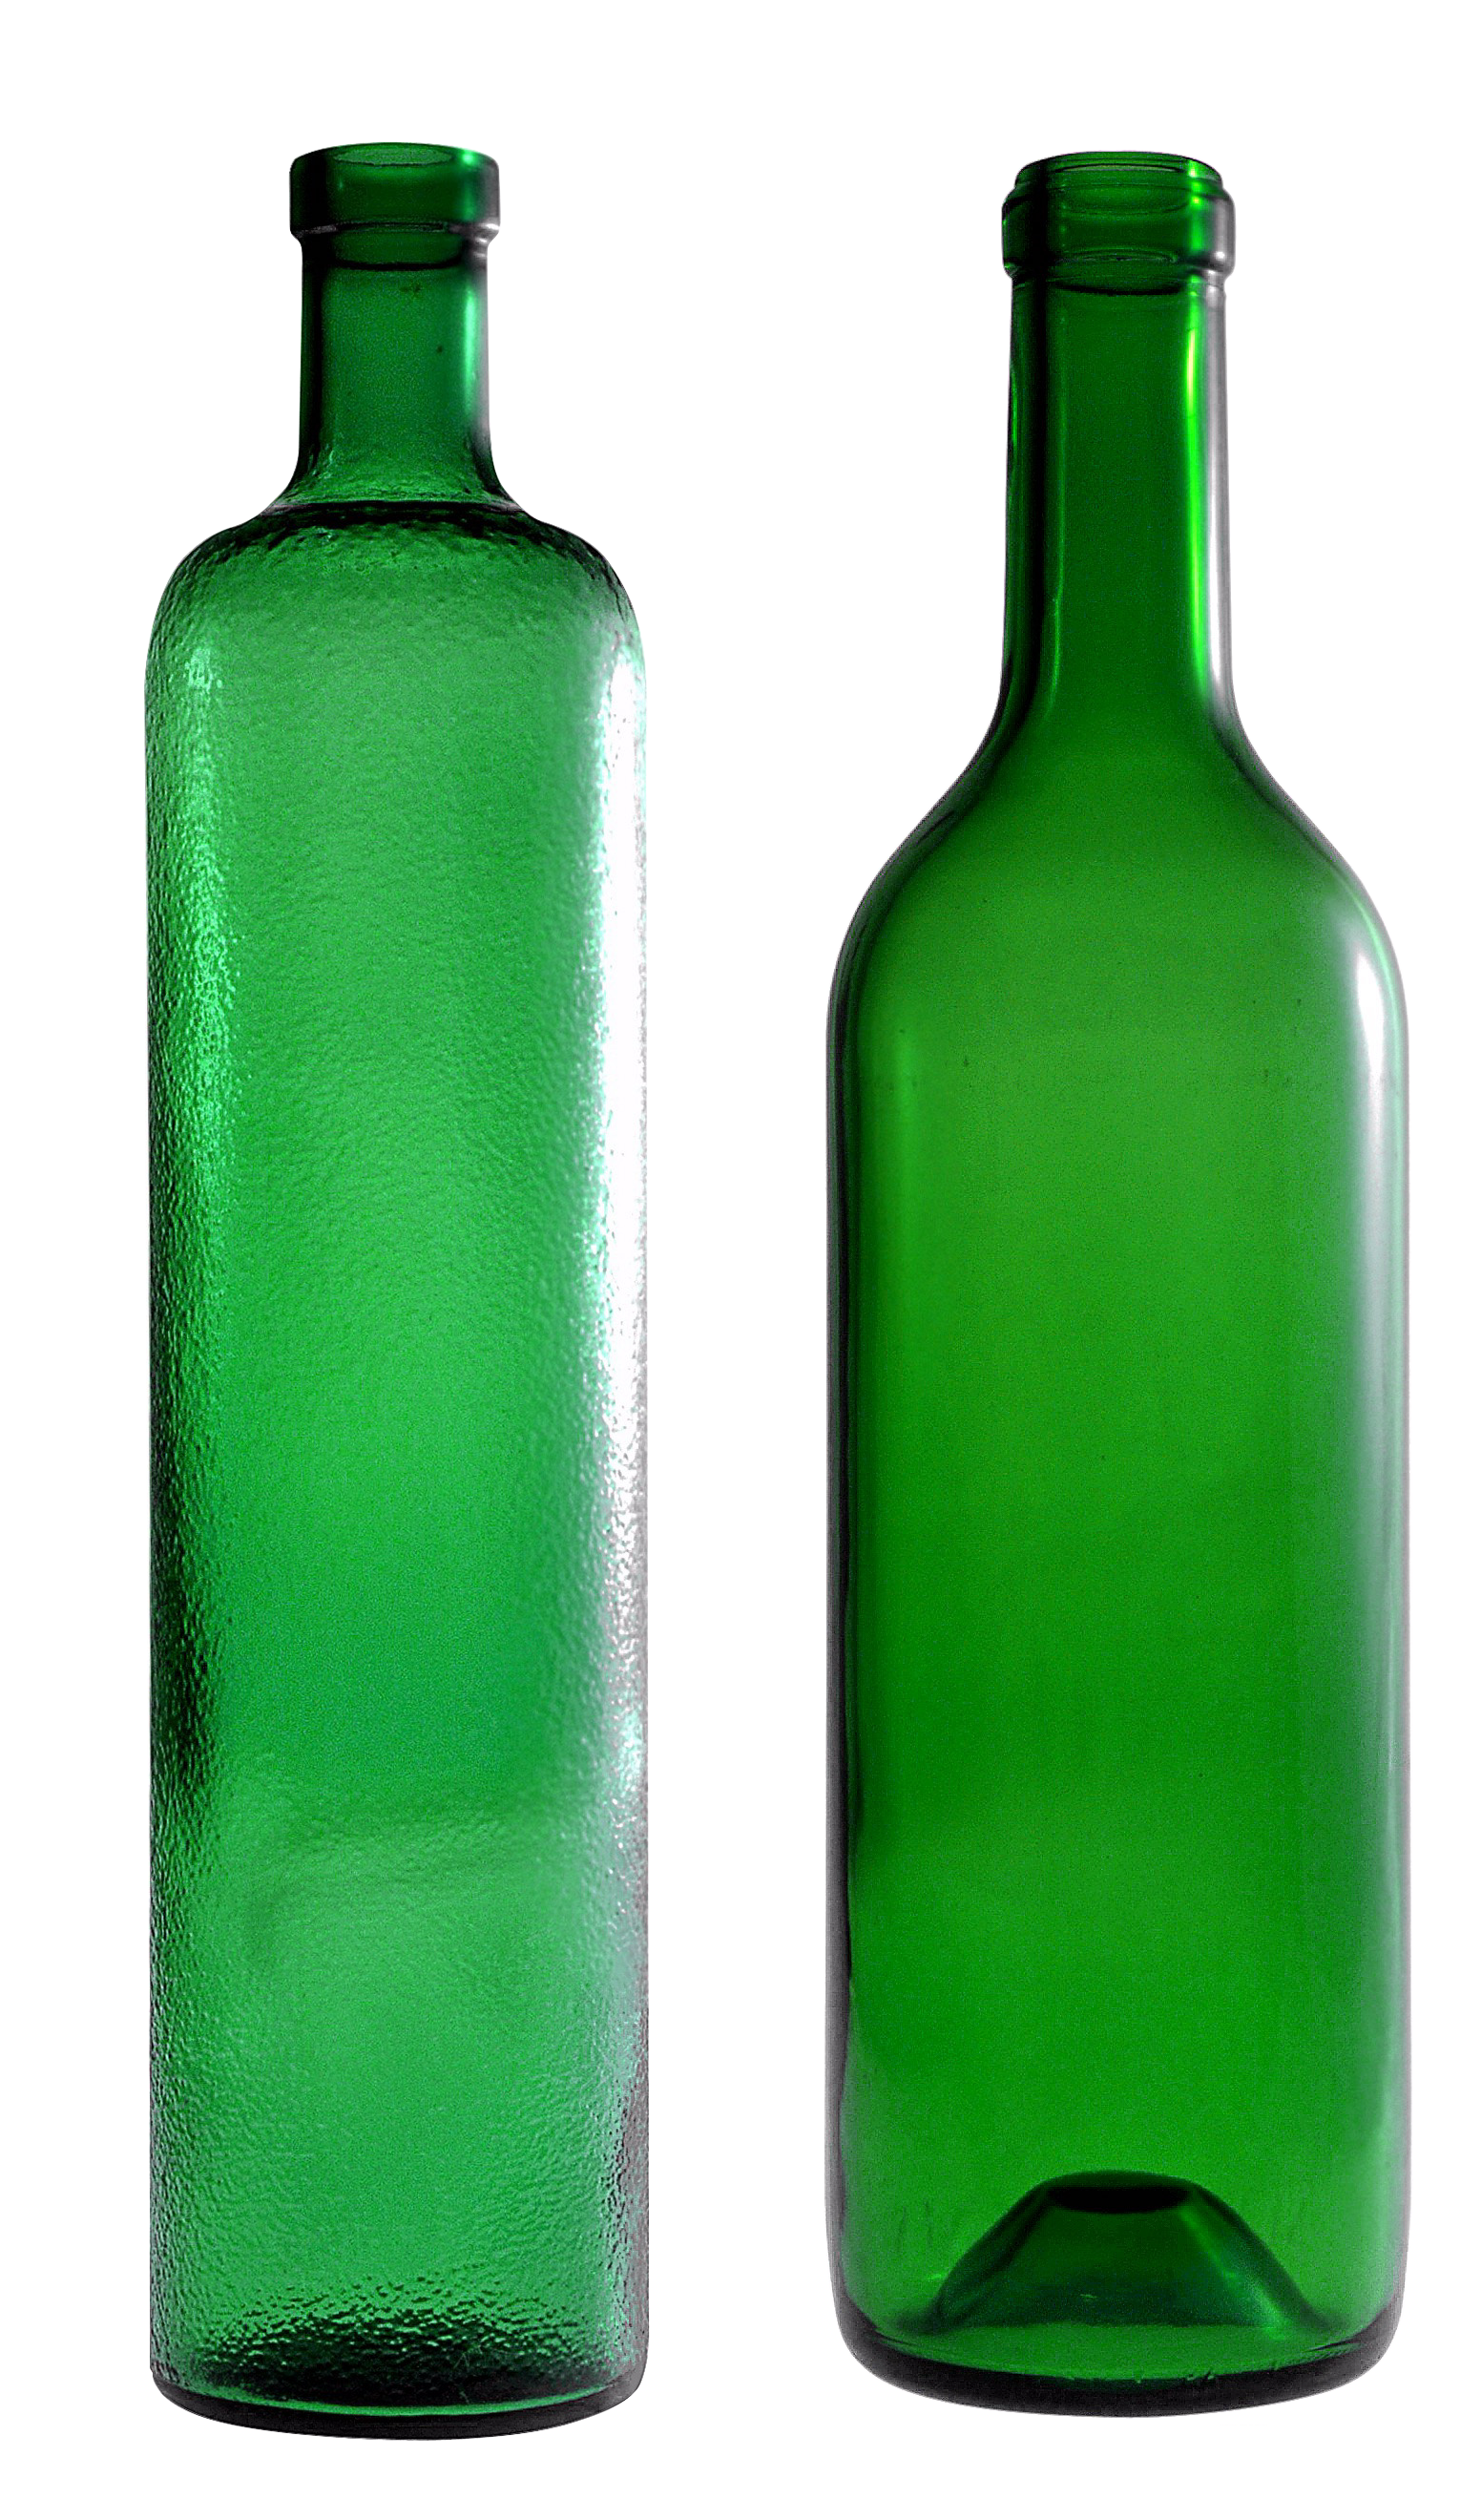 Pusta zielona szklana butelka